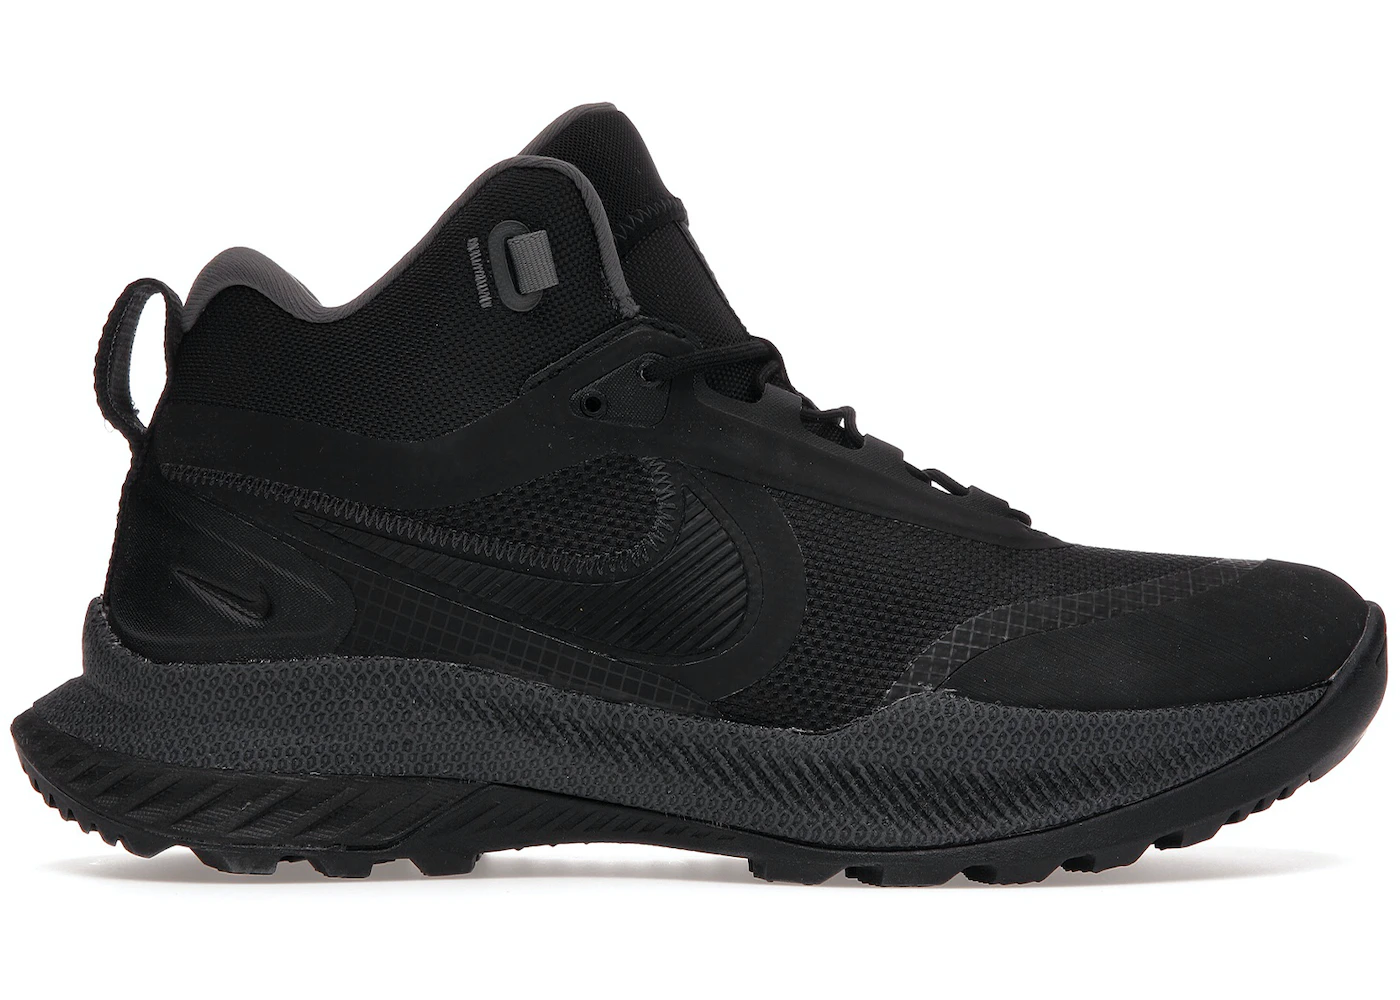 Nike React SFB Carbon High Black Anthracite (Wide) Men's - CK9951-001 - US